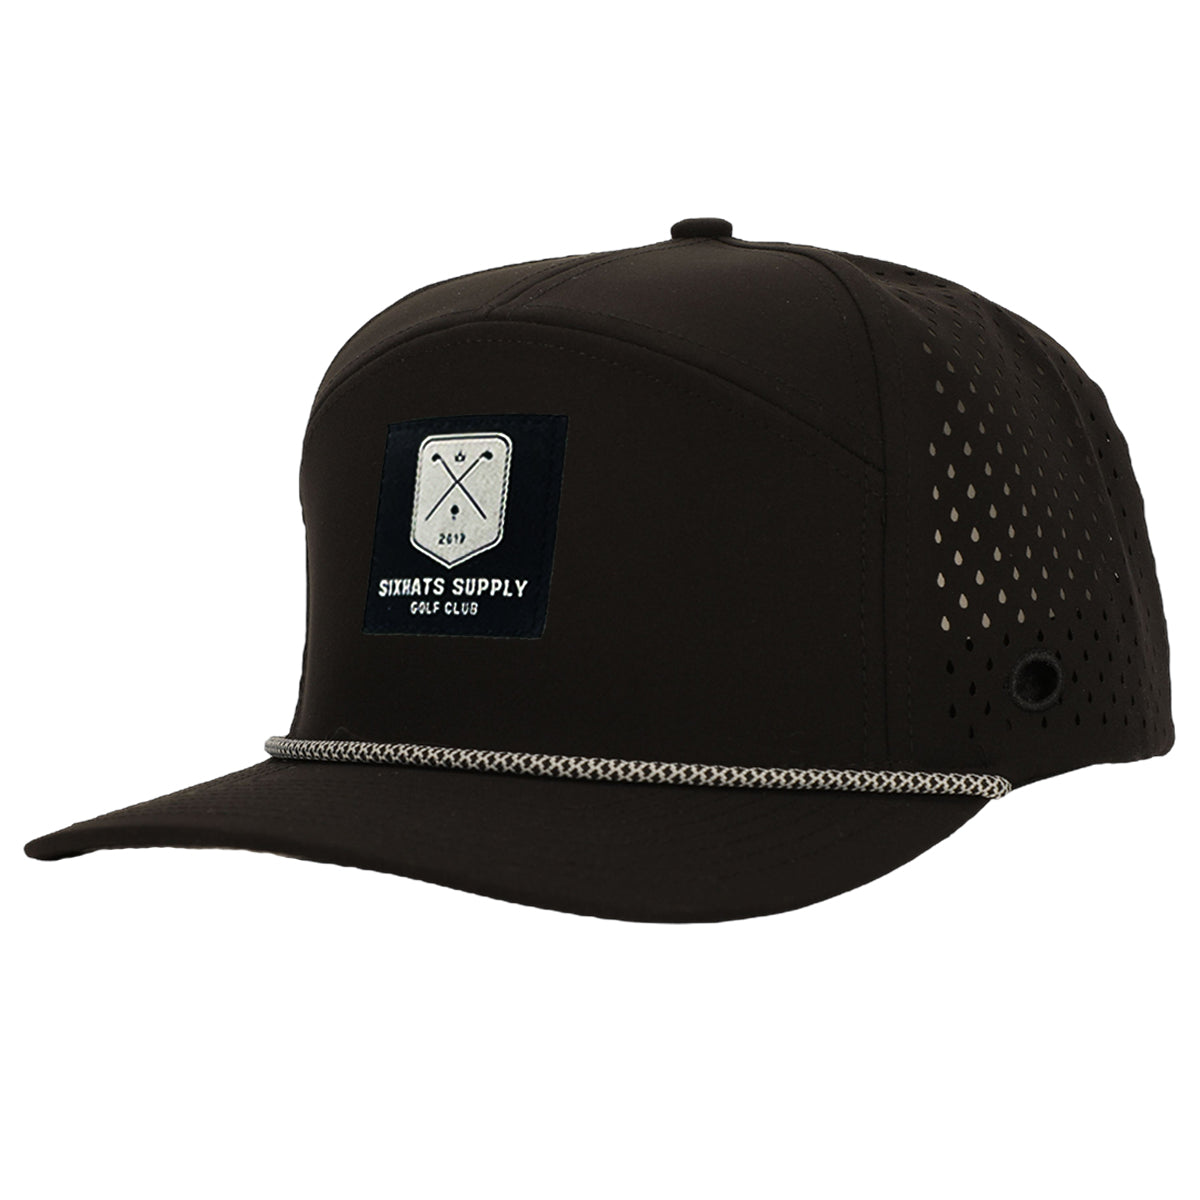 Black Tradesman Hat, Waterproof Hat